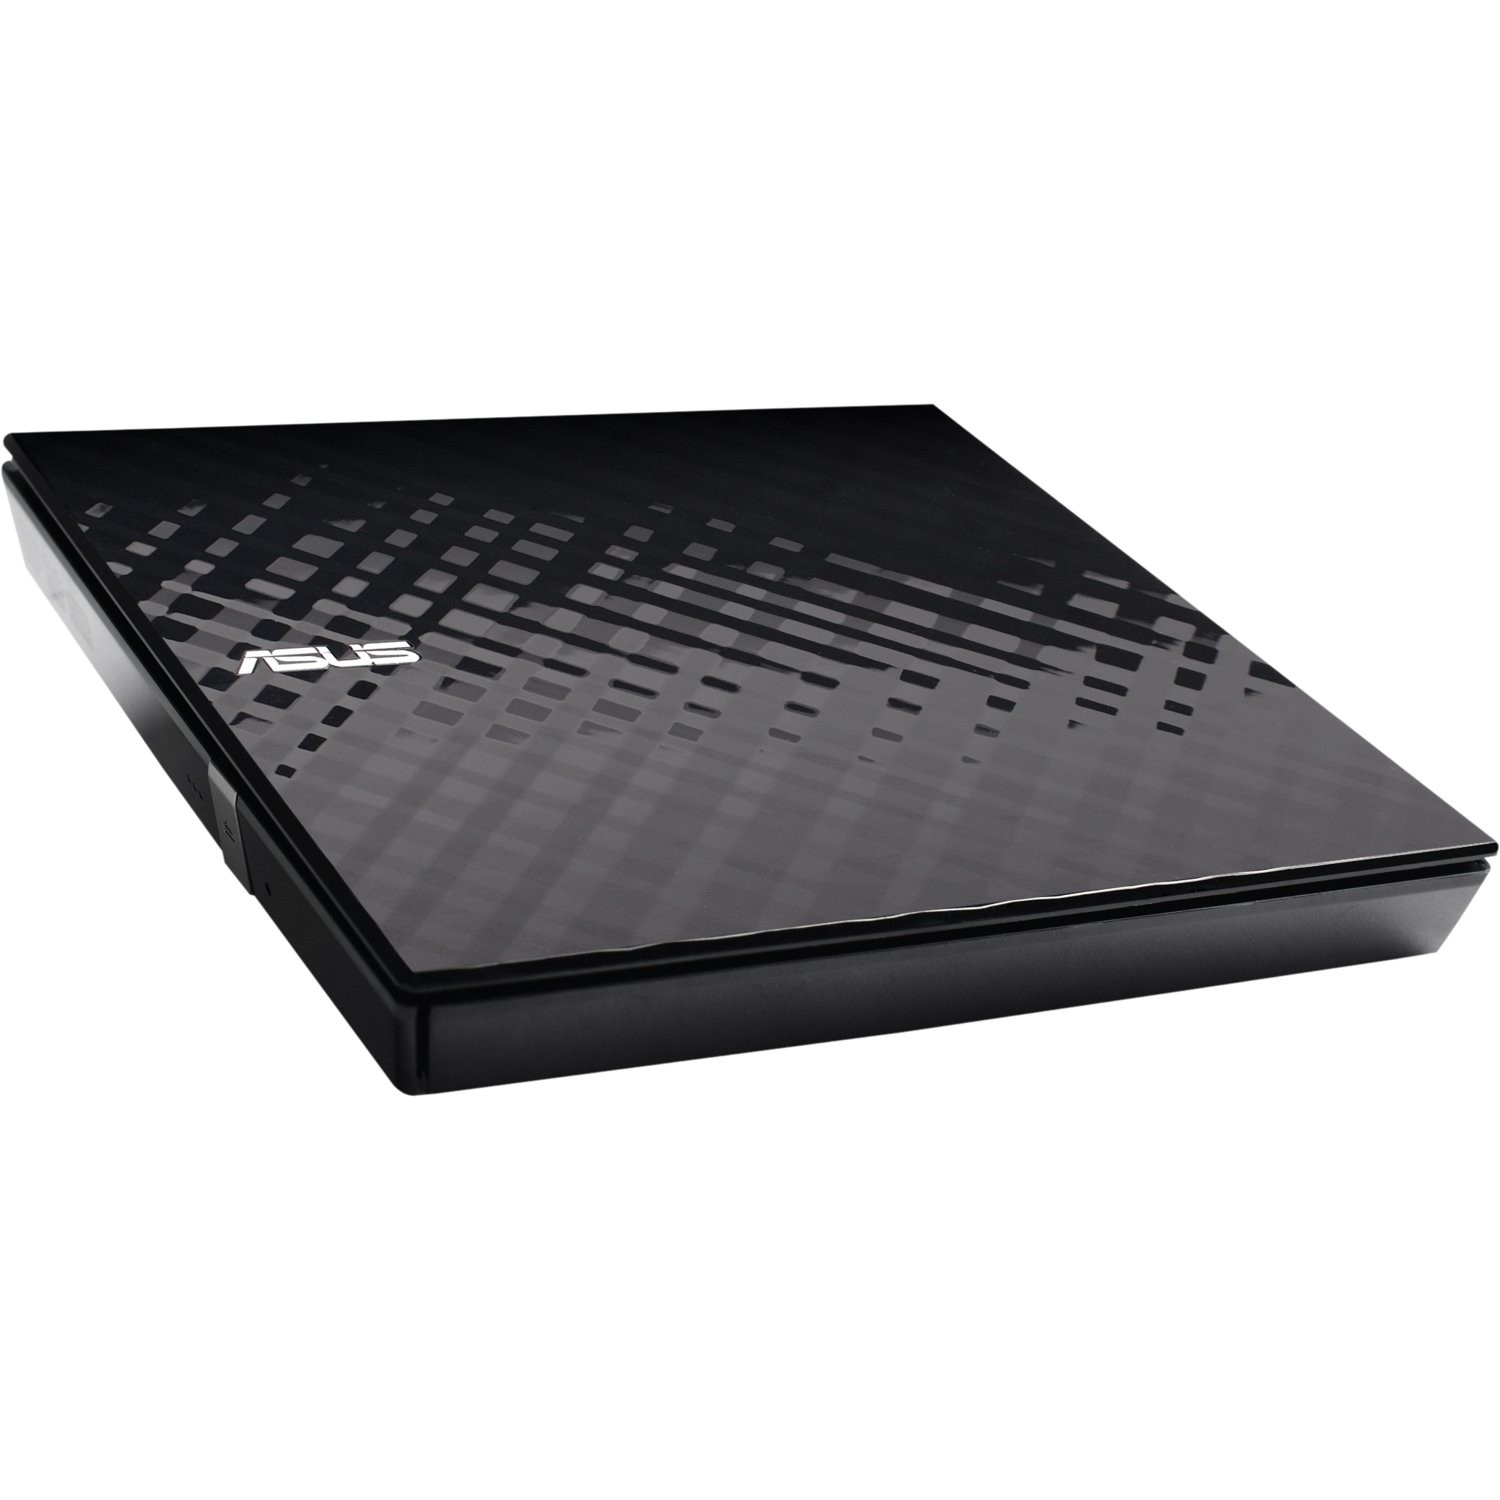 Asus SDRW-08D2S-U External DVD-Writer - Retail Pack - for PC, Mac and Laptop